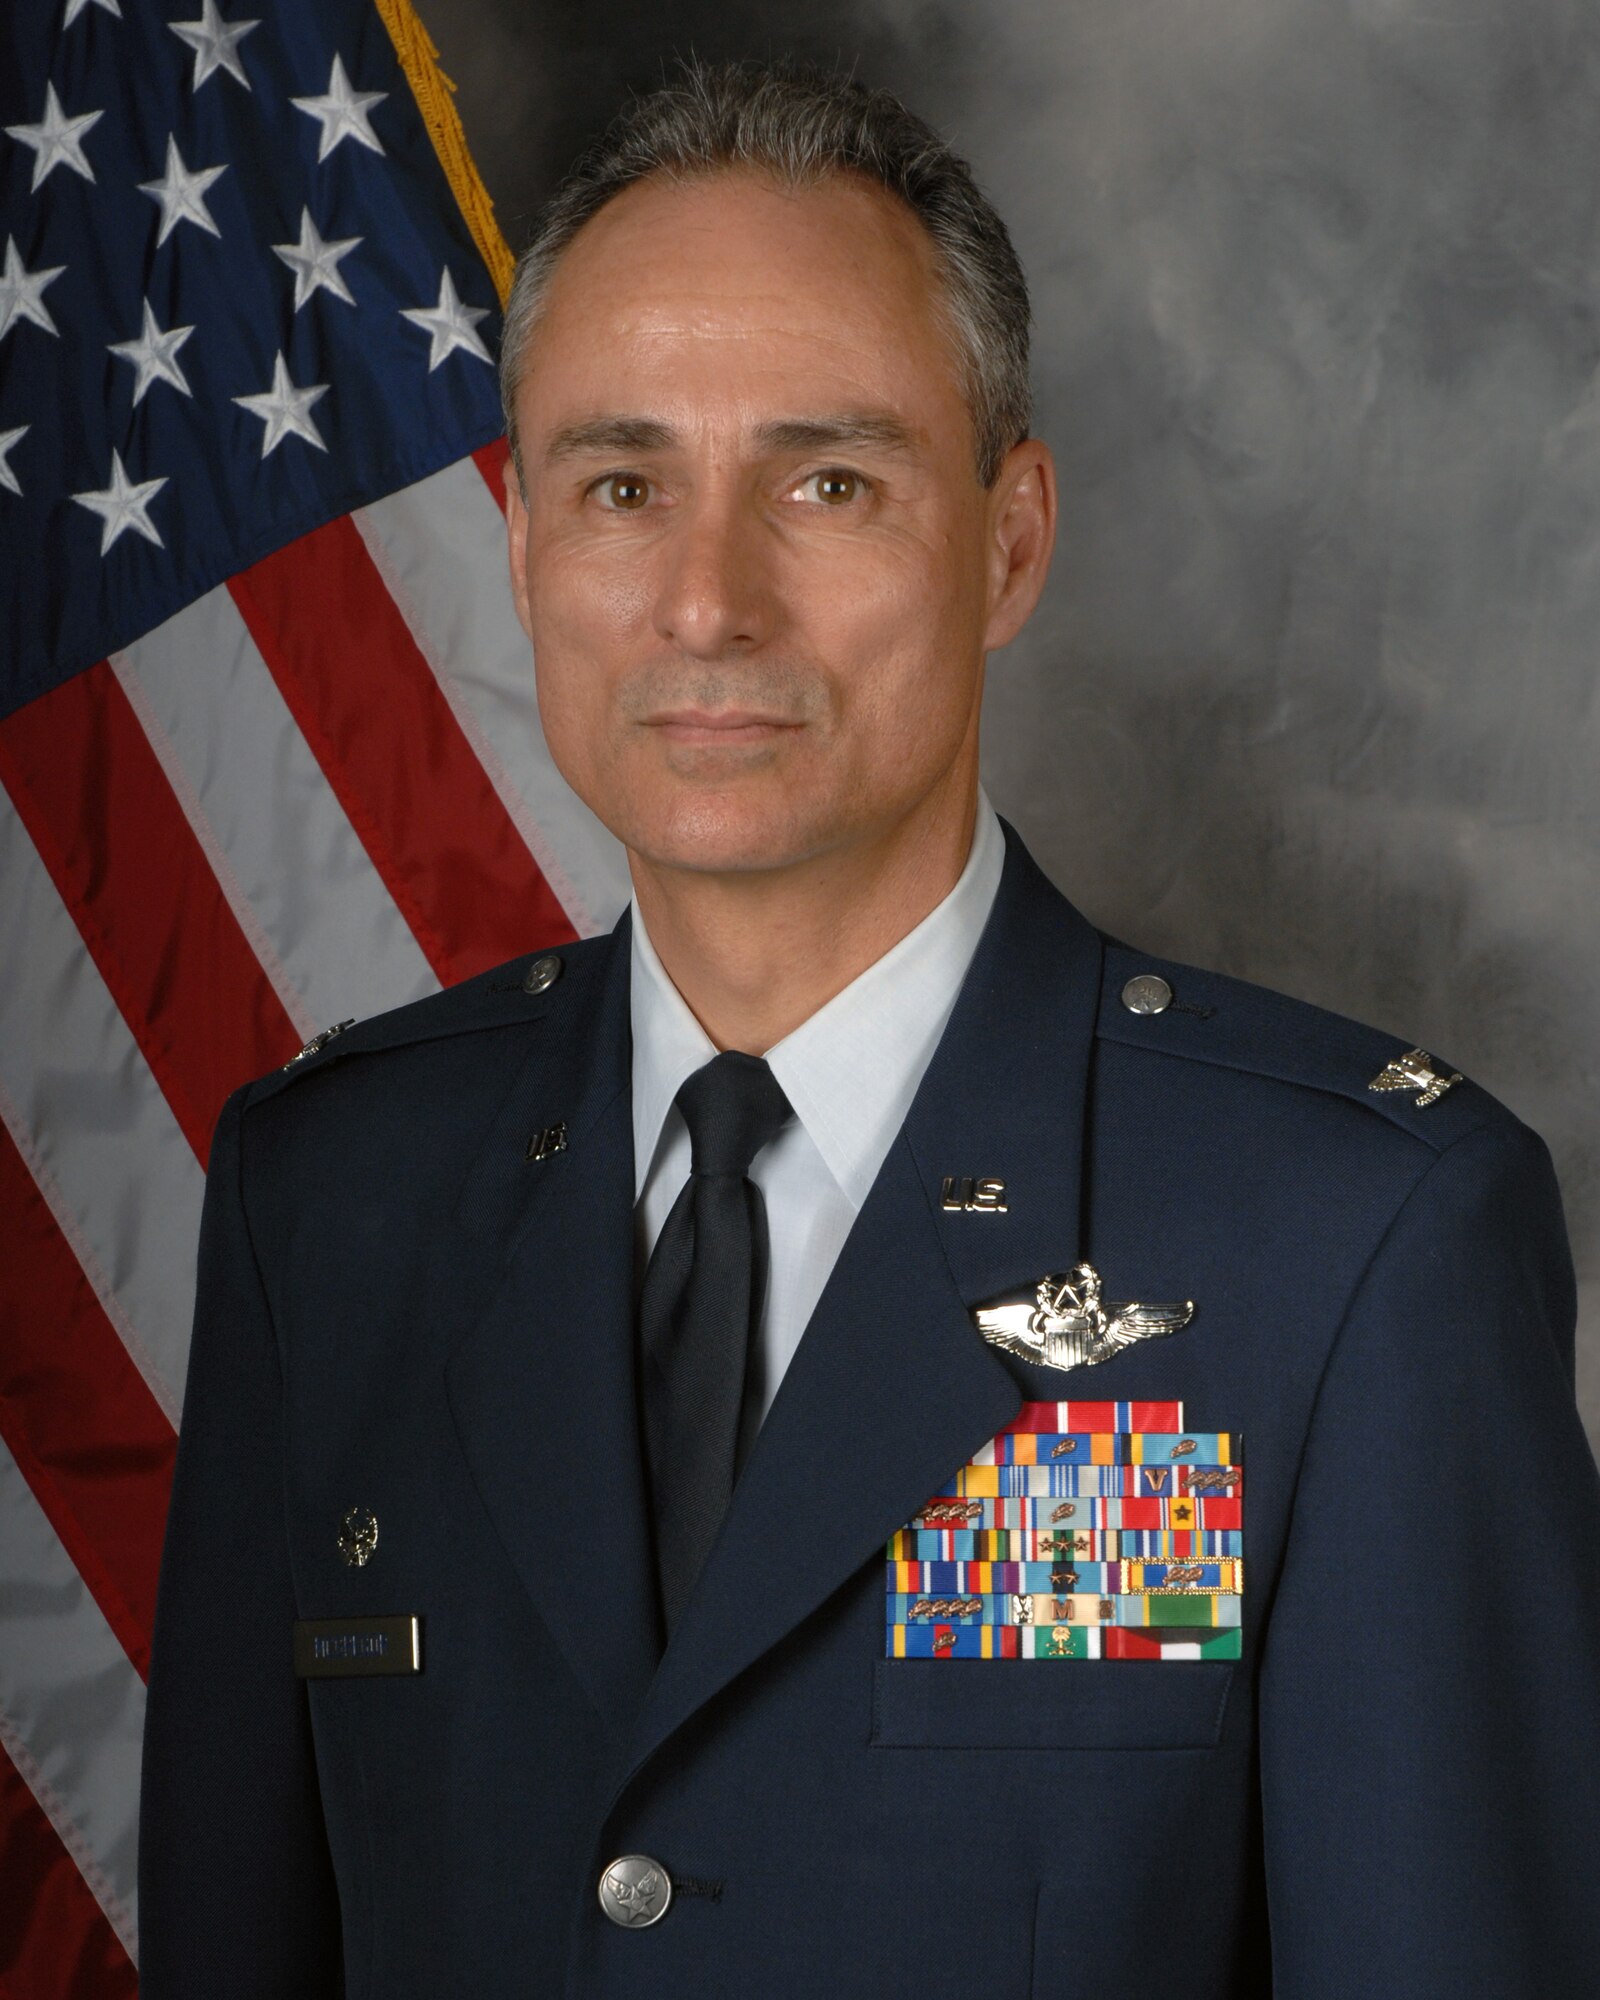 Col. Karl McGregor
Commander
452nd Air Mobility Wing
